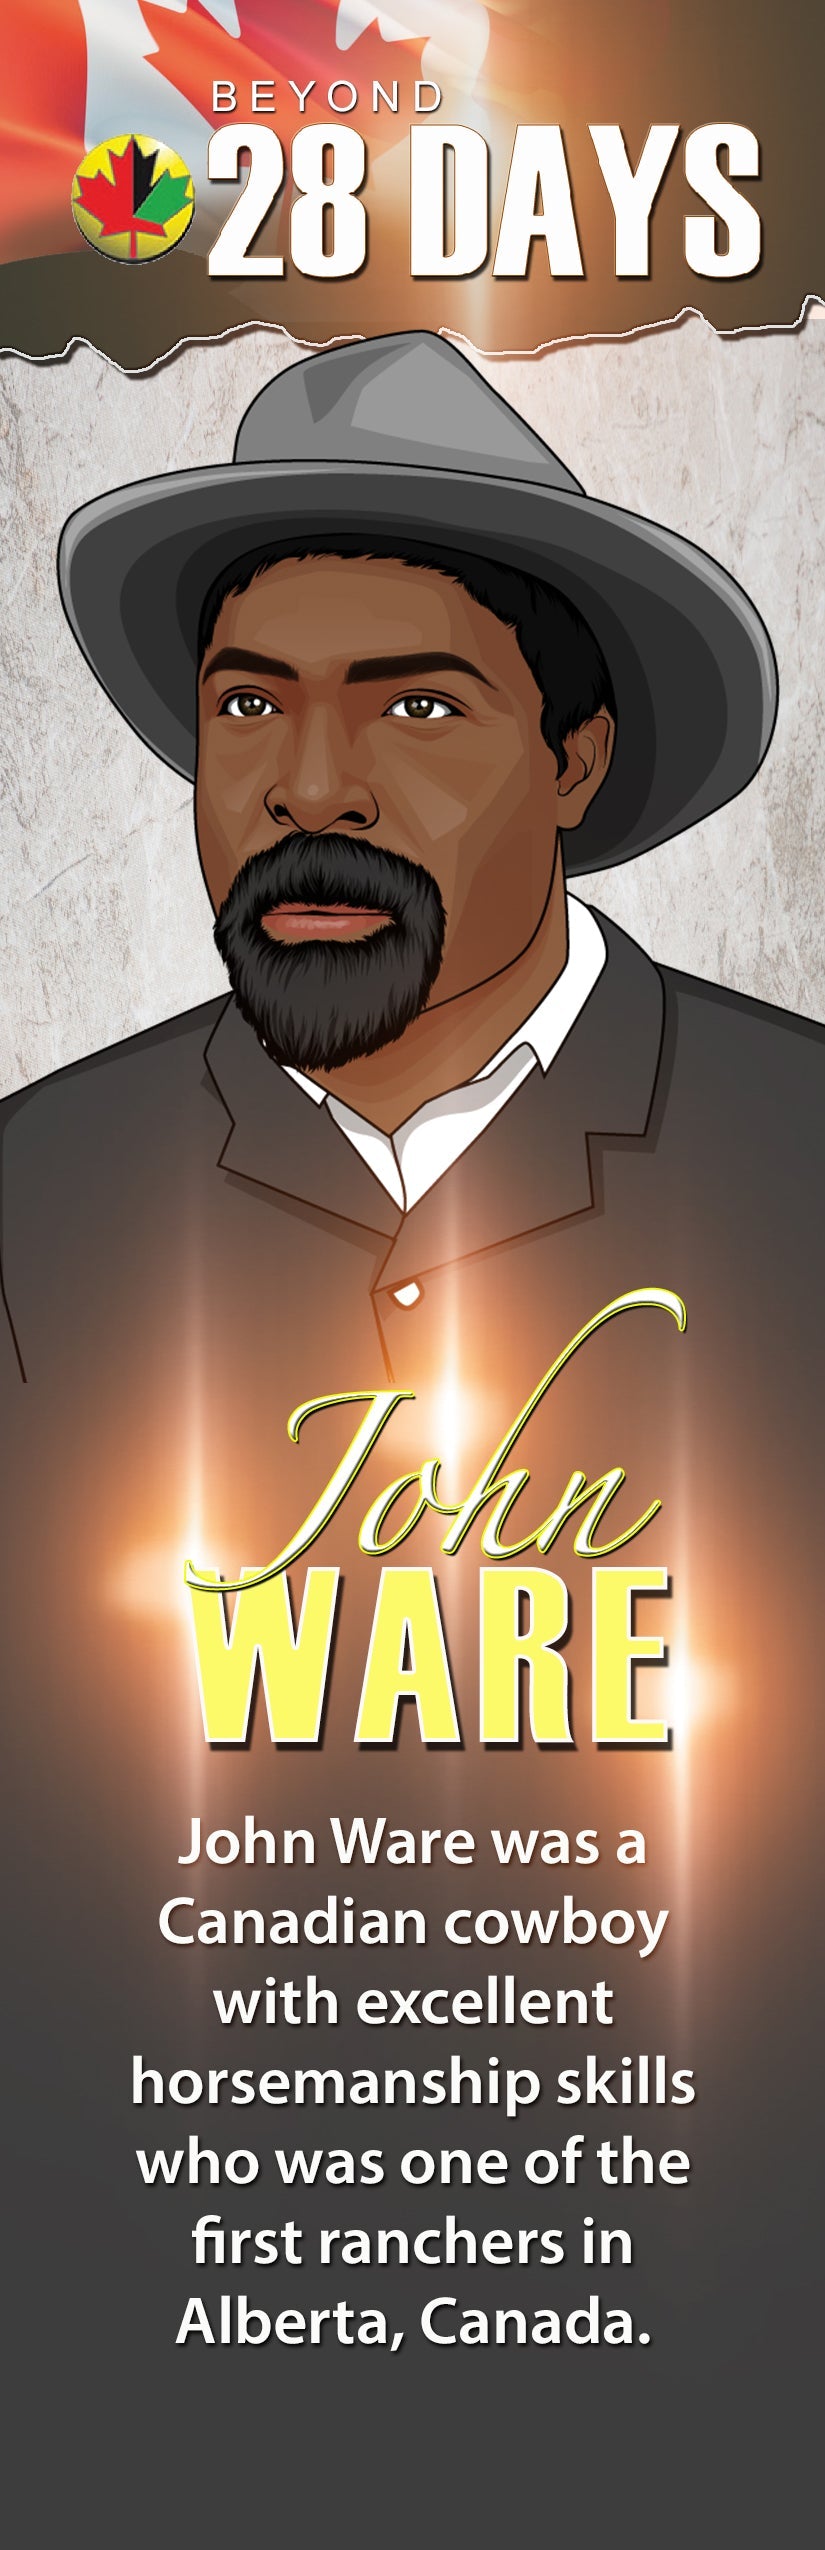 Cowboy John Ware